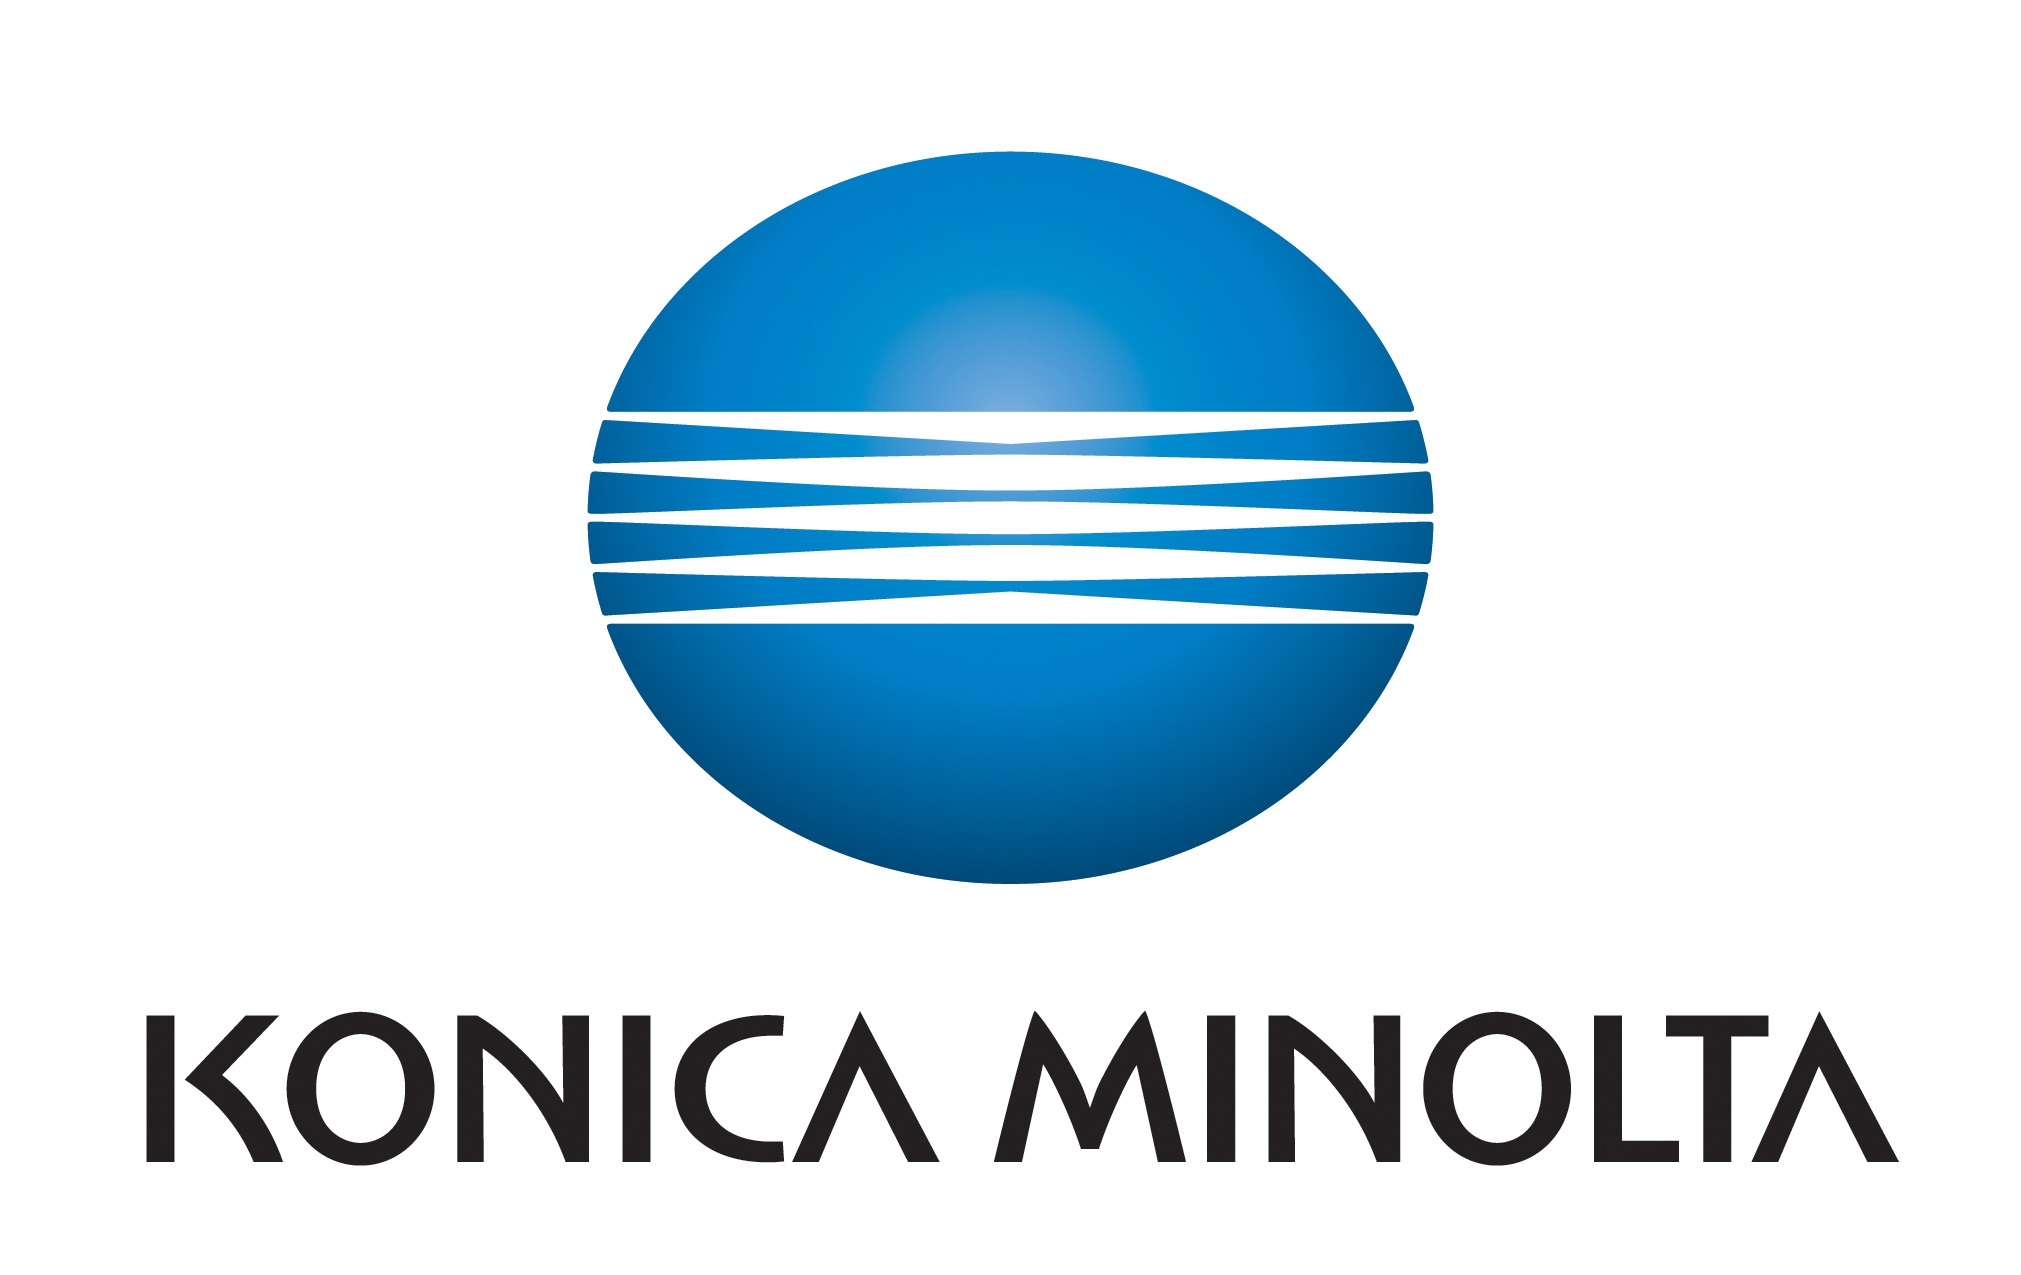 Konica Minolta and G